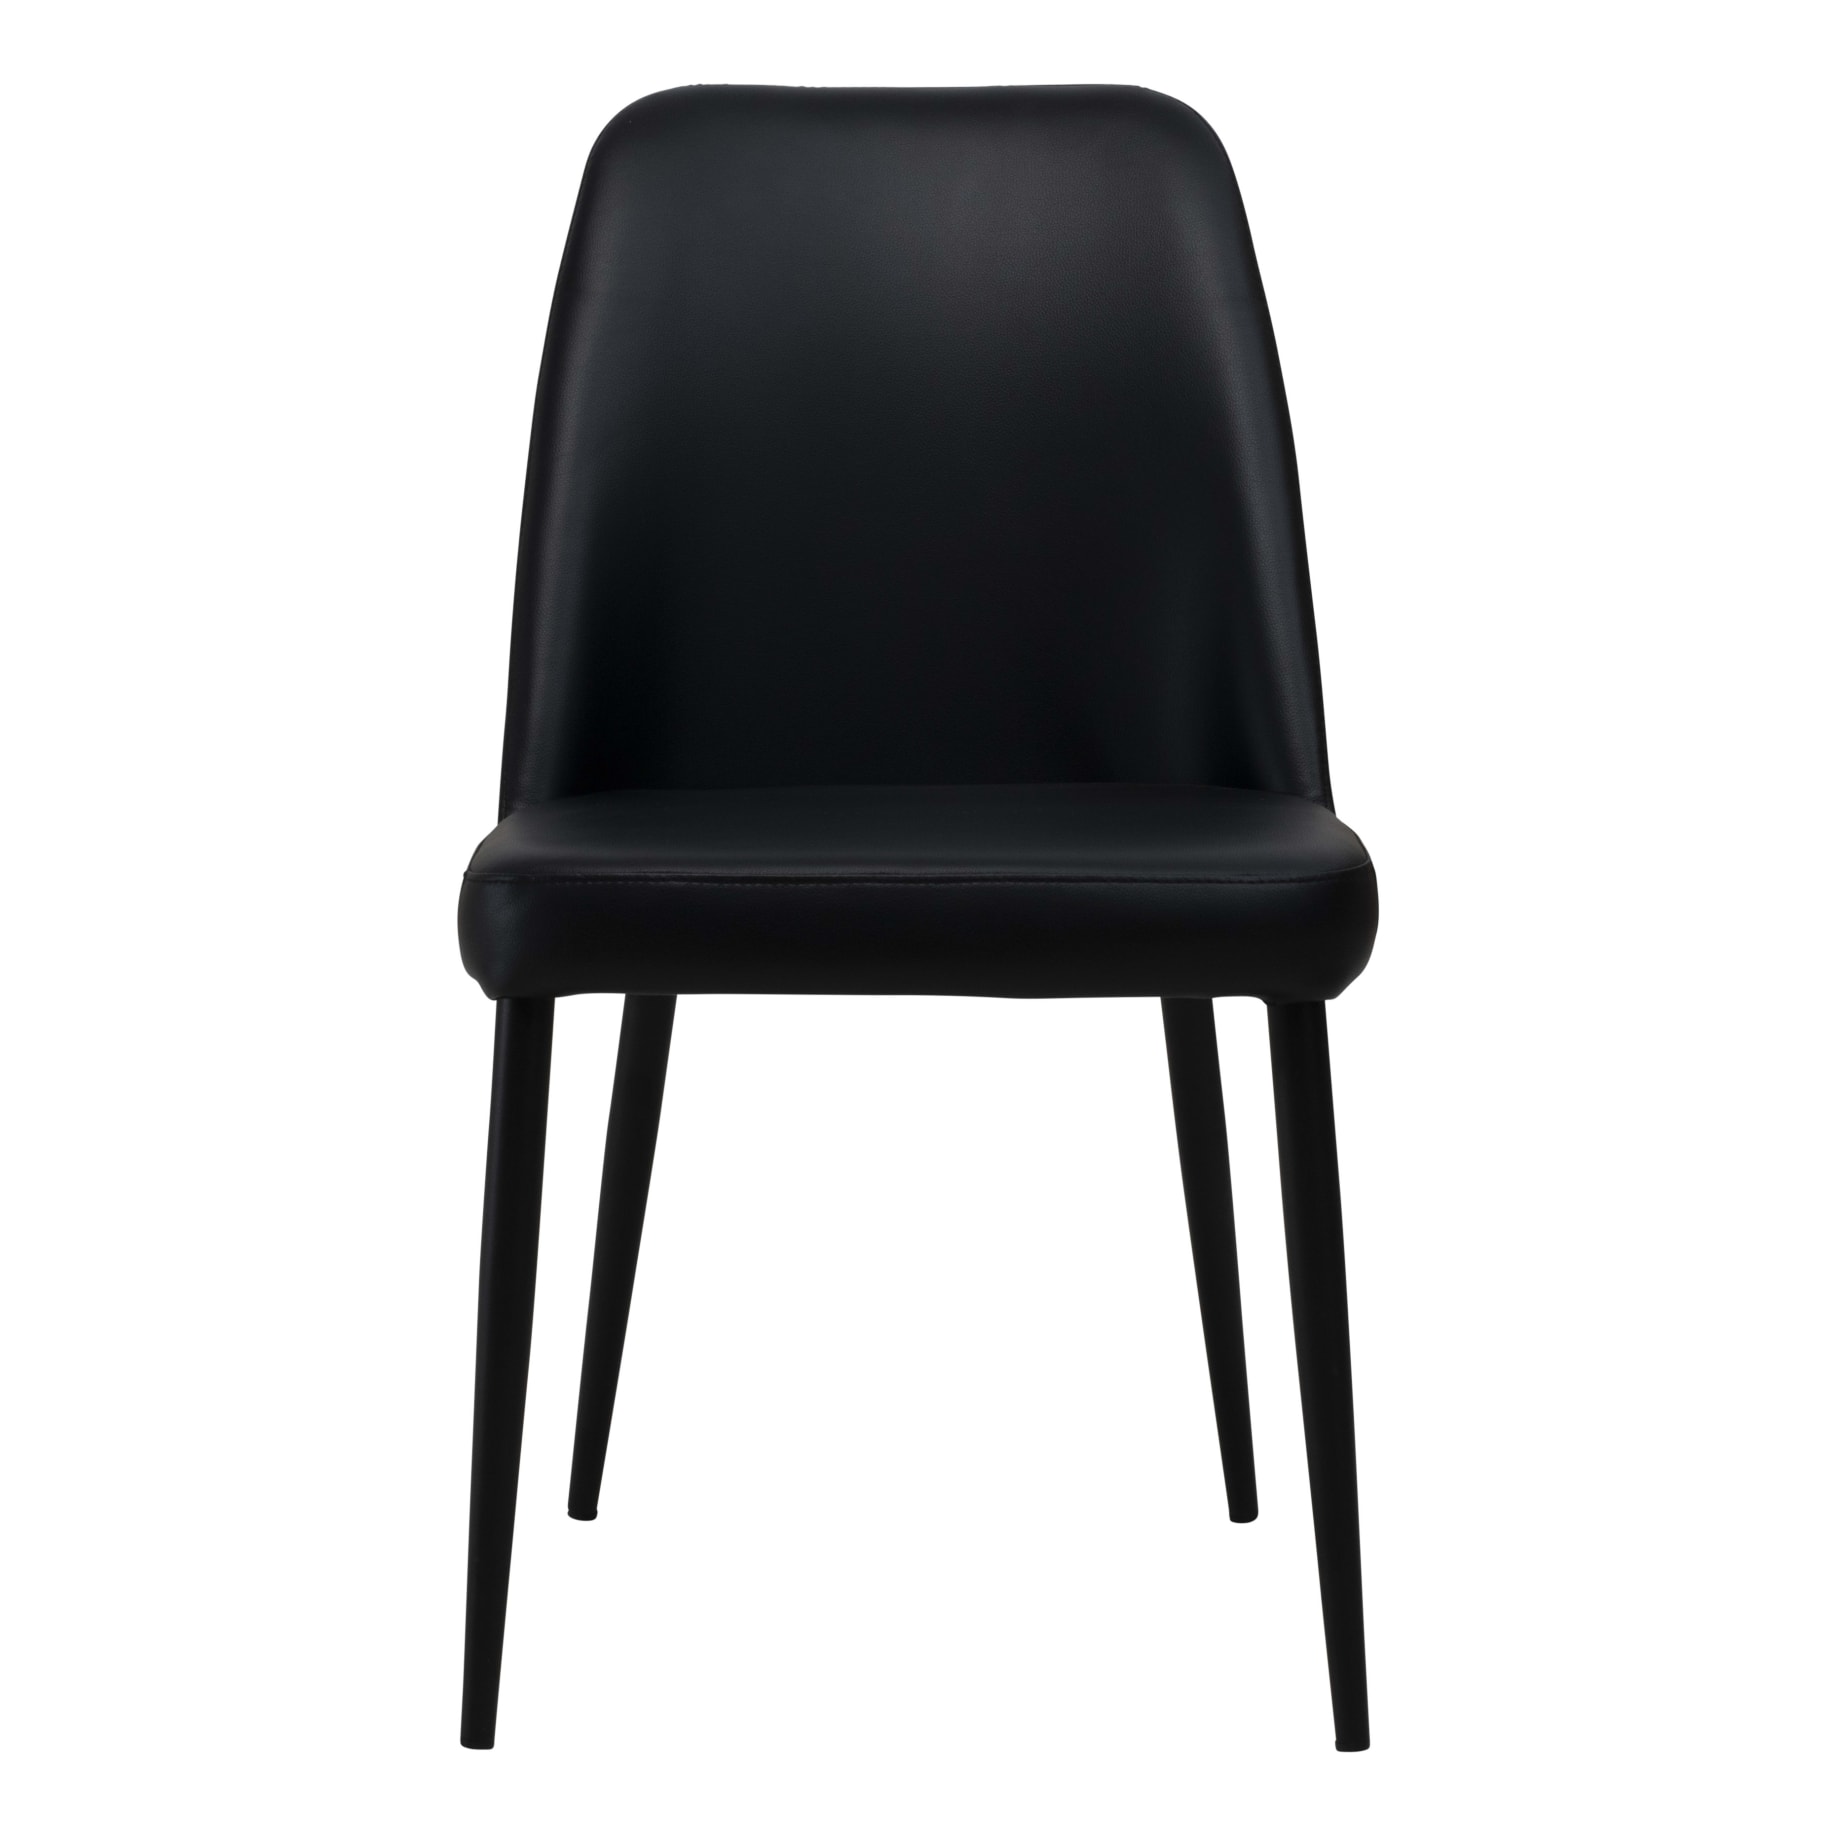 Avon Dining Chair in Black PU / Black Leg